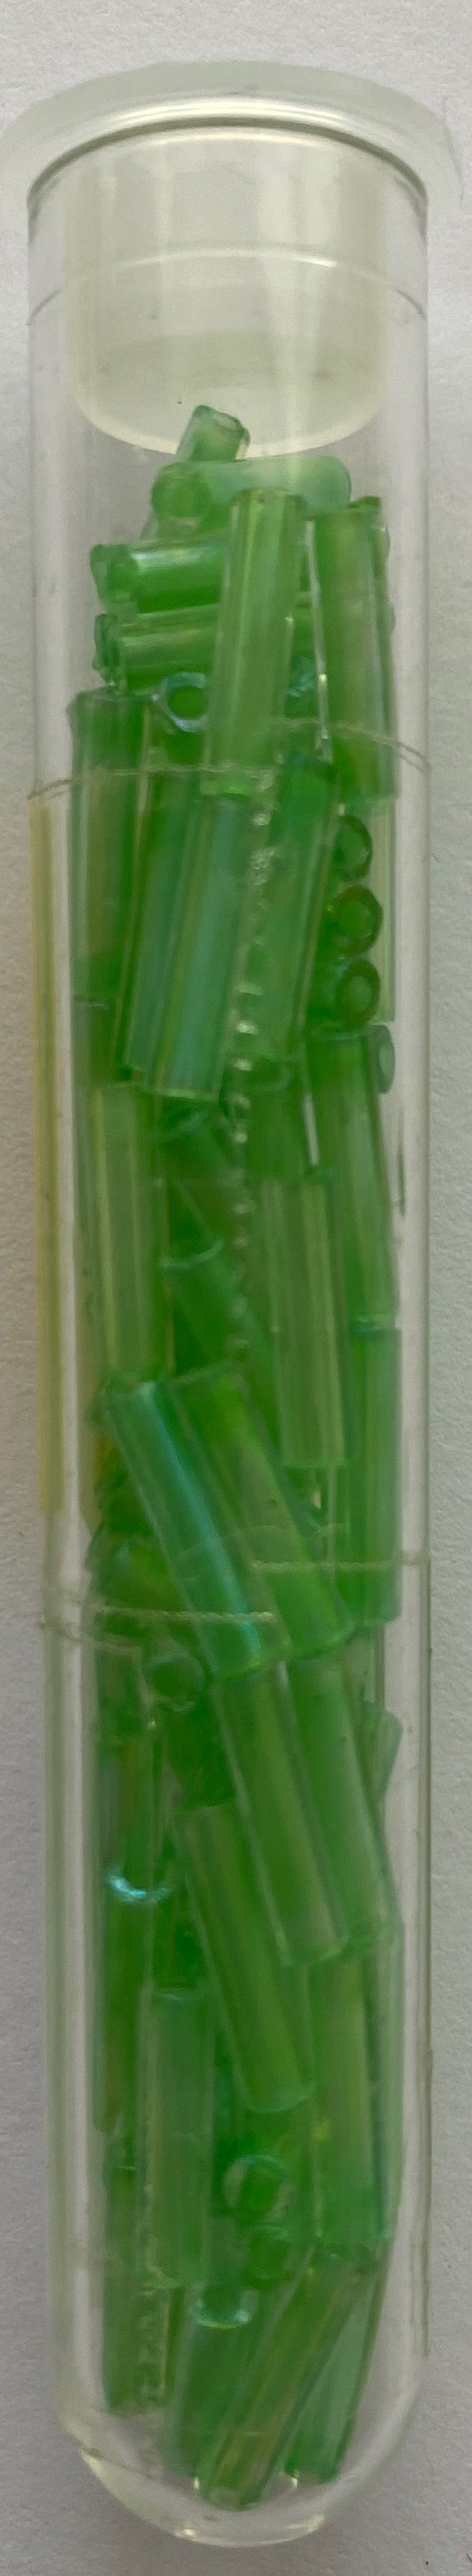 10mm Bugle Beads - Pale Green